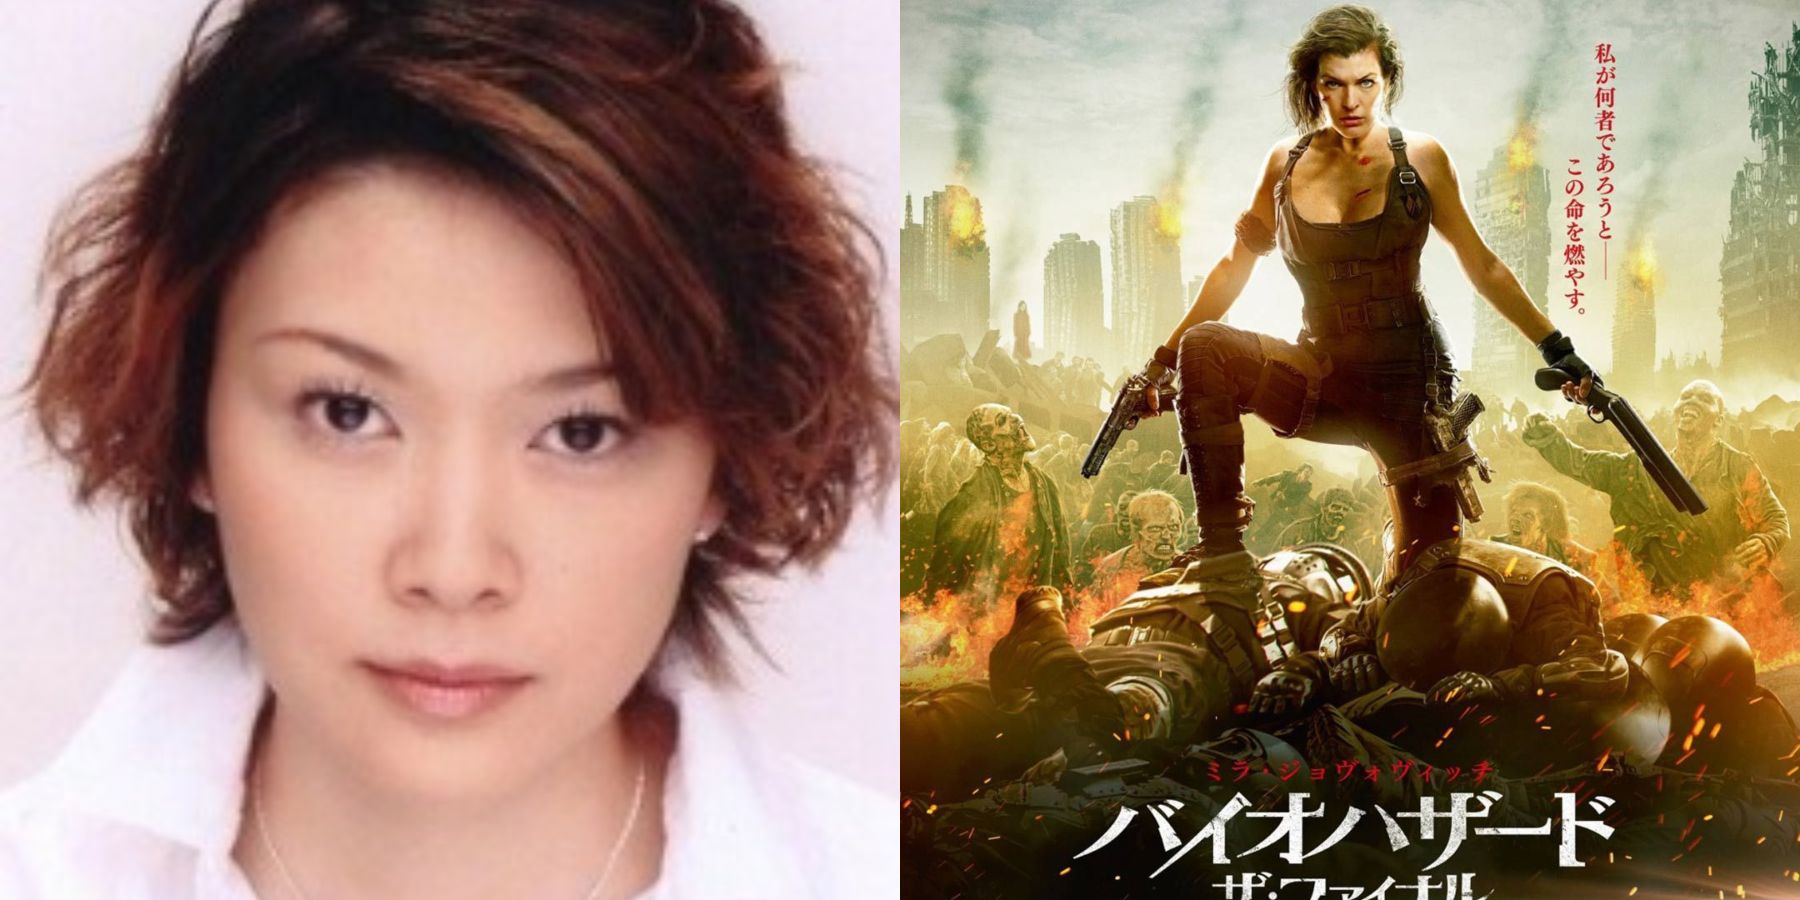 Takako Honda, the voice actor for Alice in Resident Evil movies